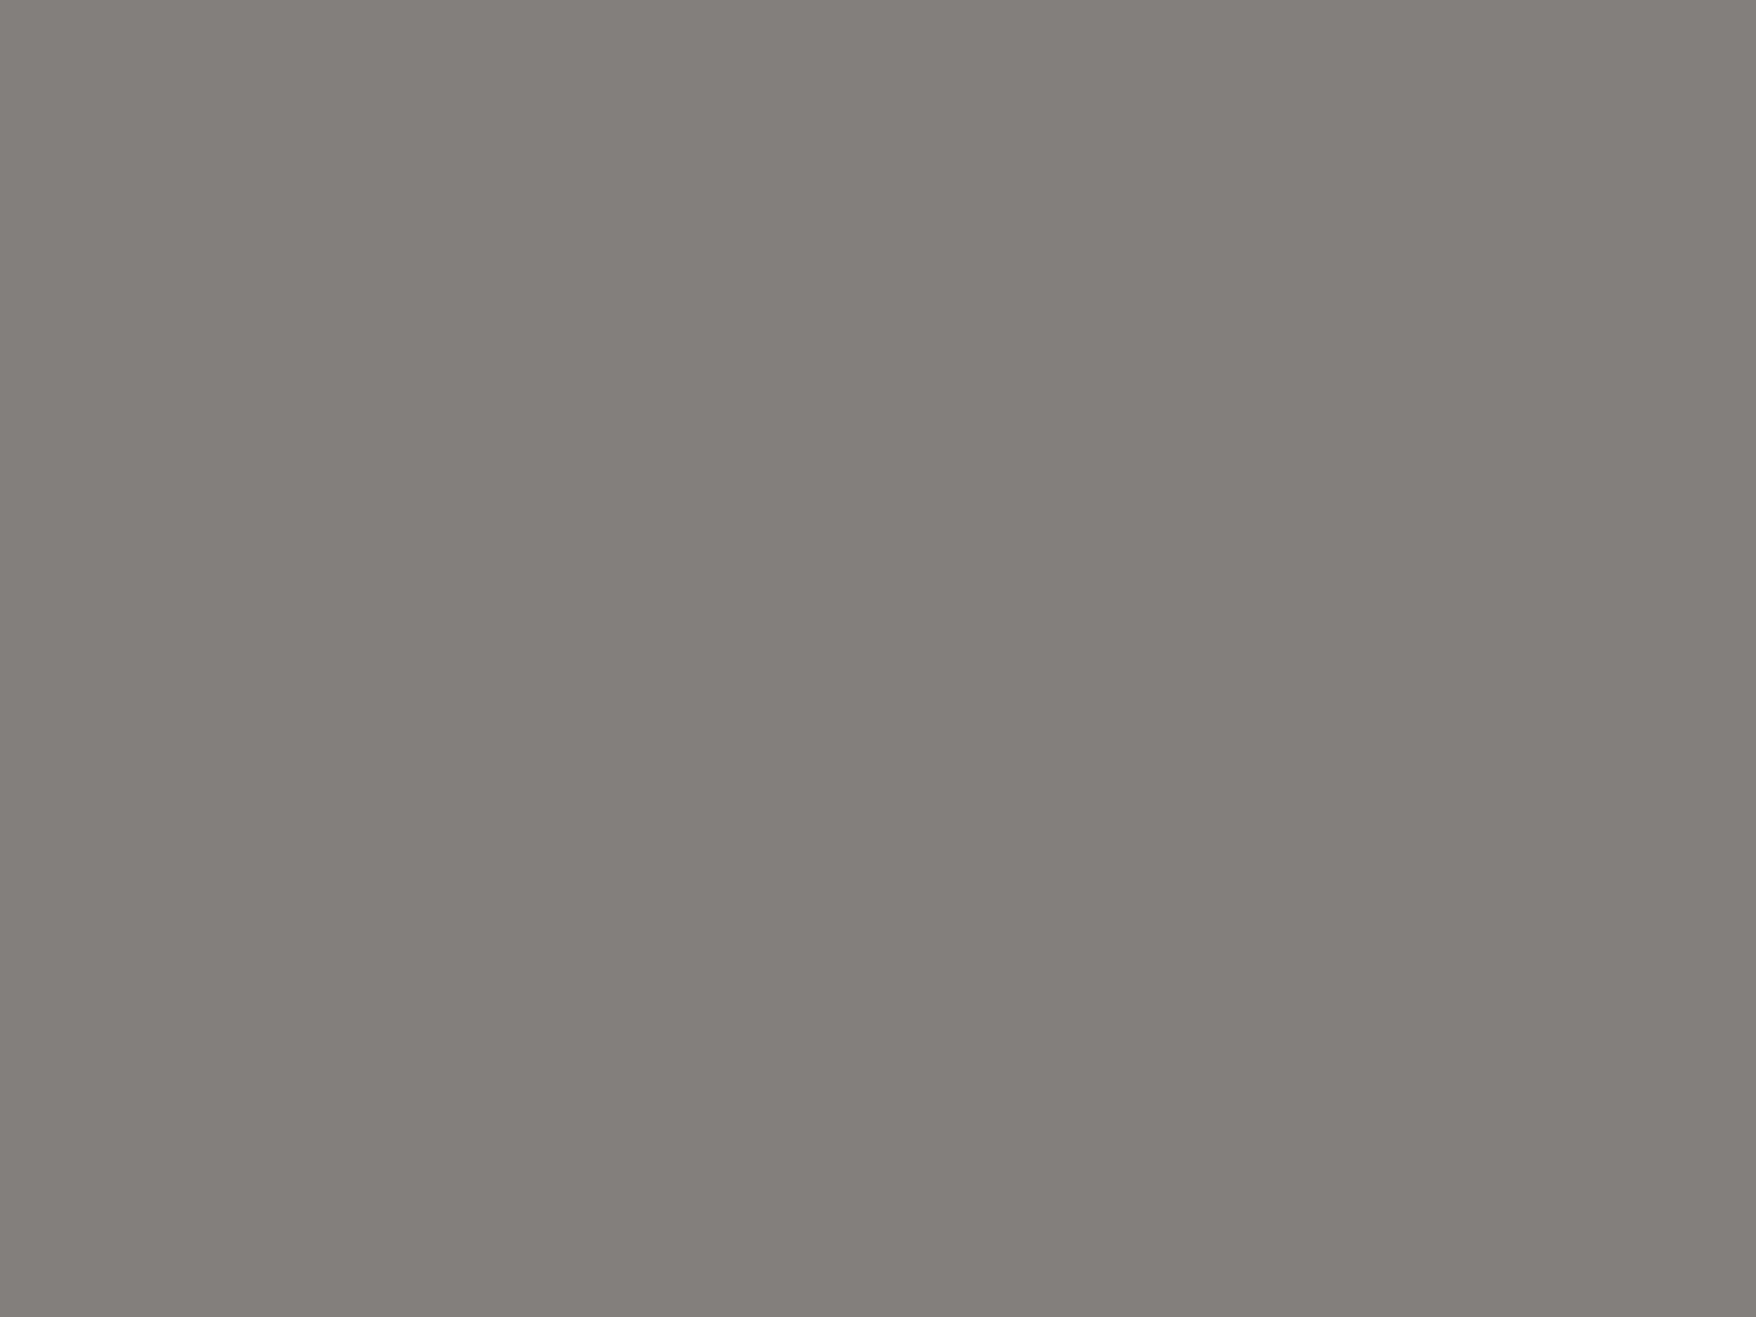 Панорама Санкт-Петербурга с Исаакиевским собором (фрагмент). Фотография: Иерей Максим Массалитин / <a href="https://commons.wikimedia.org/w/index.php?curid=7325293" target="_blank" rel="noopener">commons.wikimedia</a> / <a href="https://creativecommons.org/licenses/by-sa/2.0" target="_blank" rel="noopener">CC BY-SA 2.0</a>